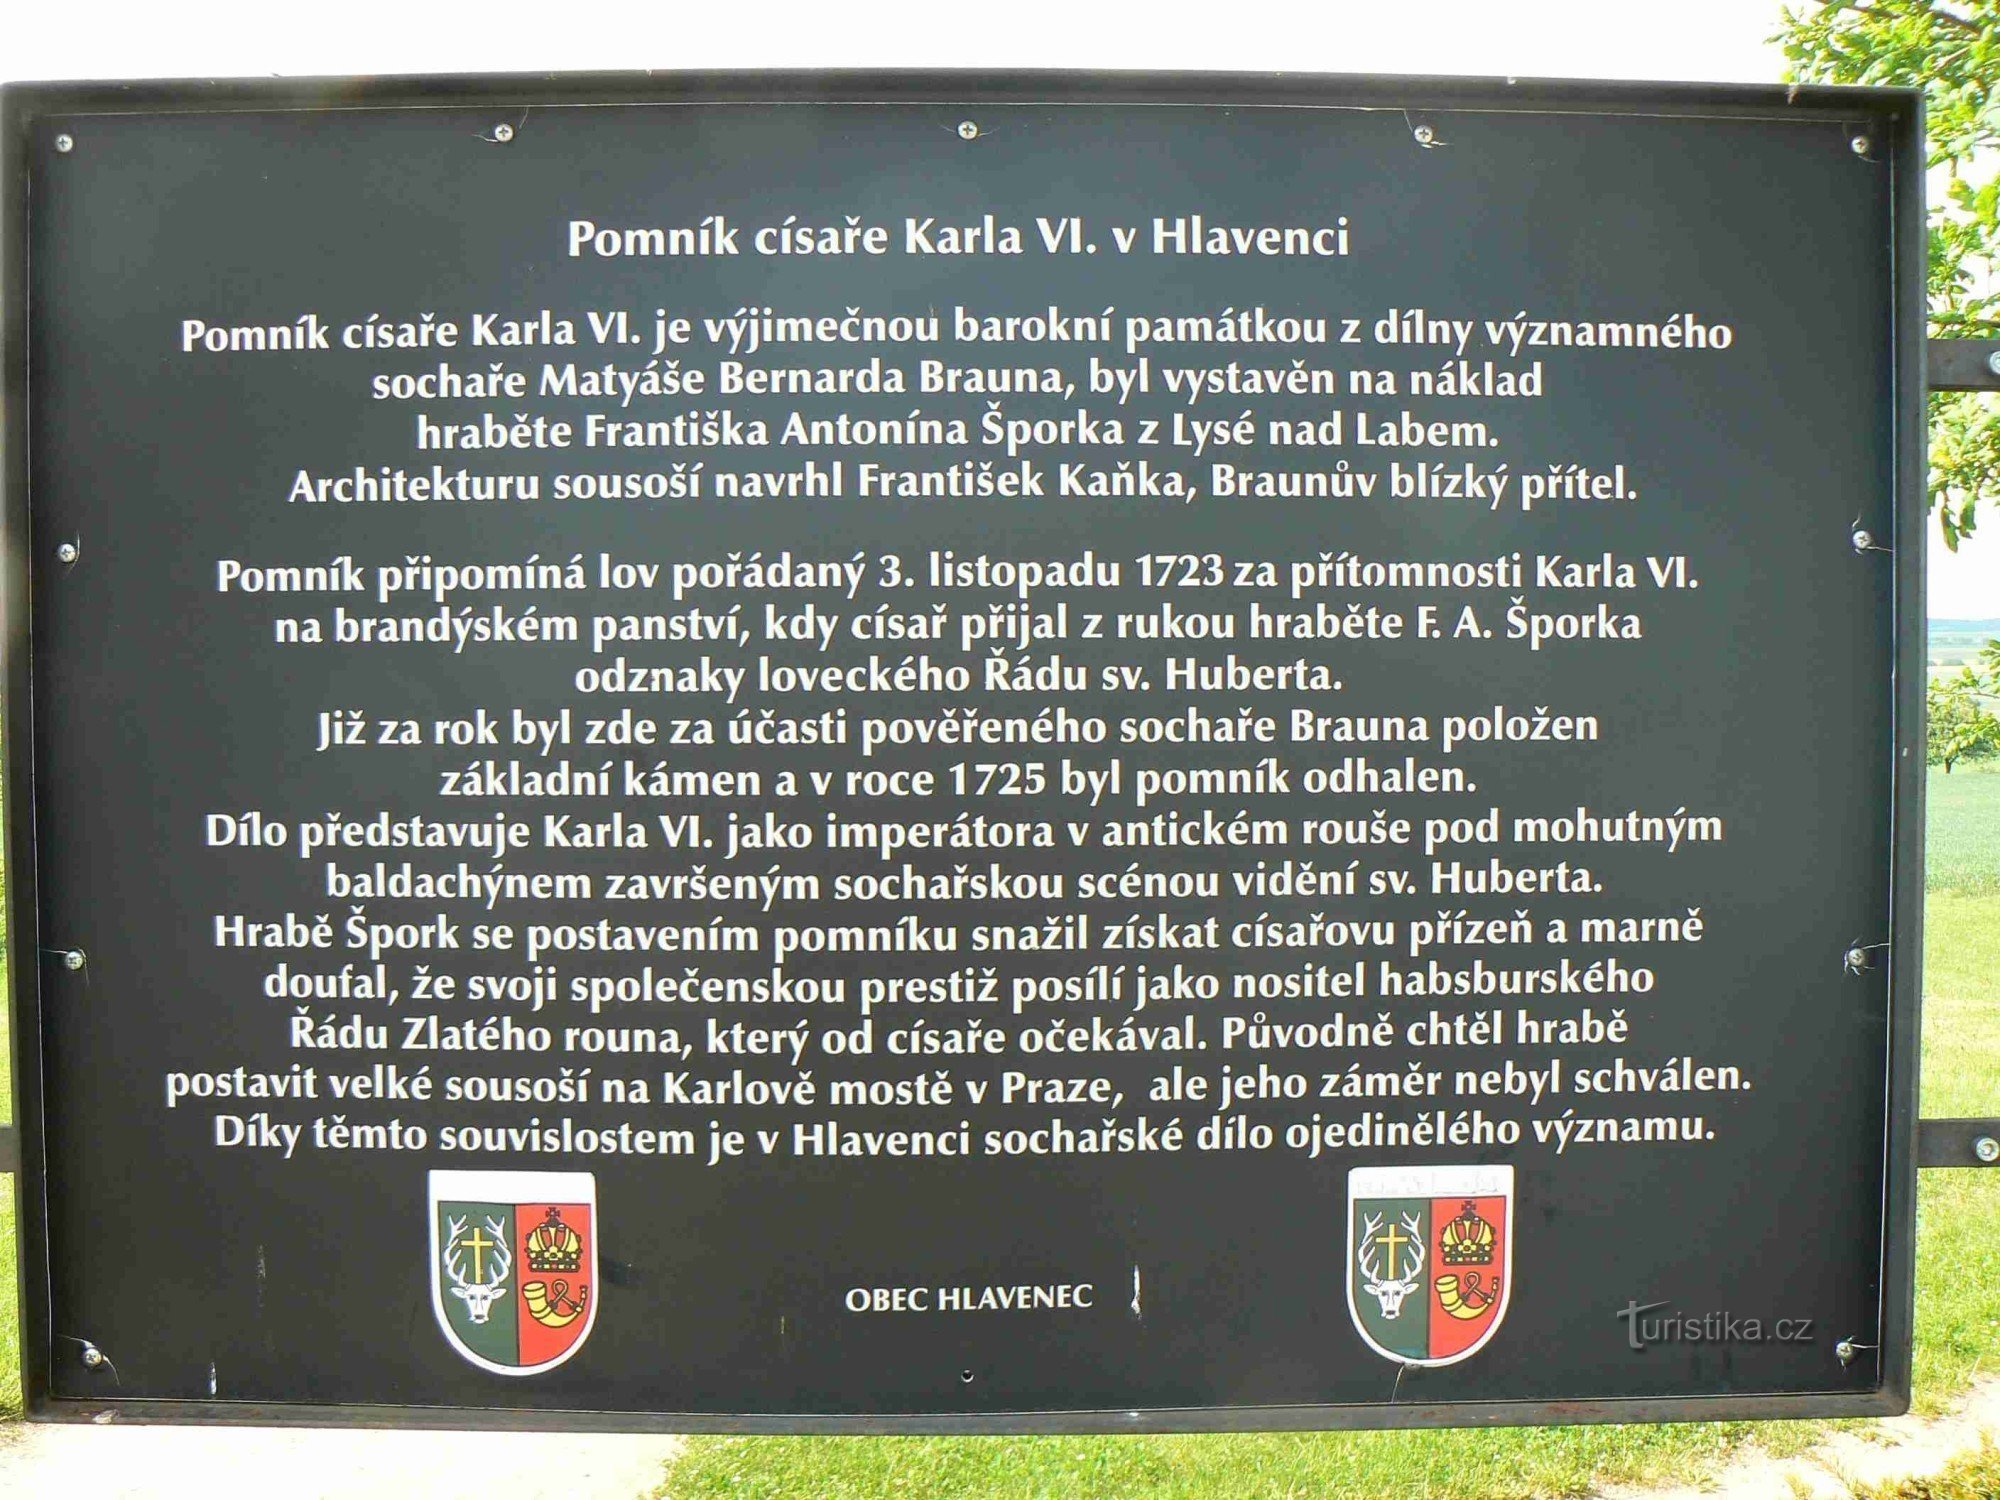 Monument till kejsar Karl VI.